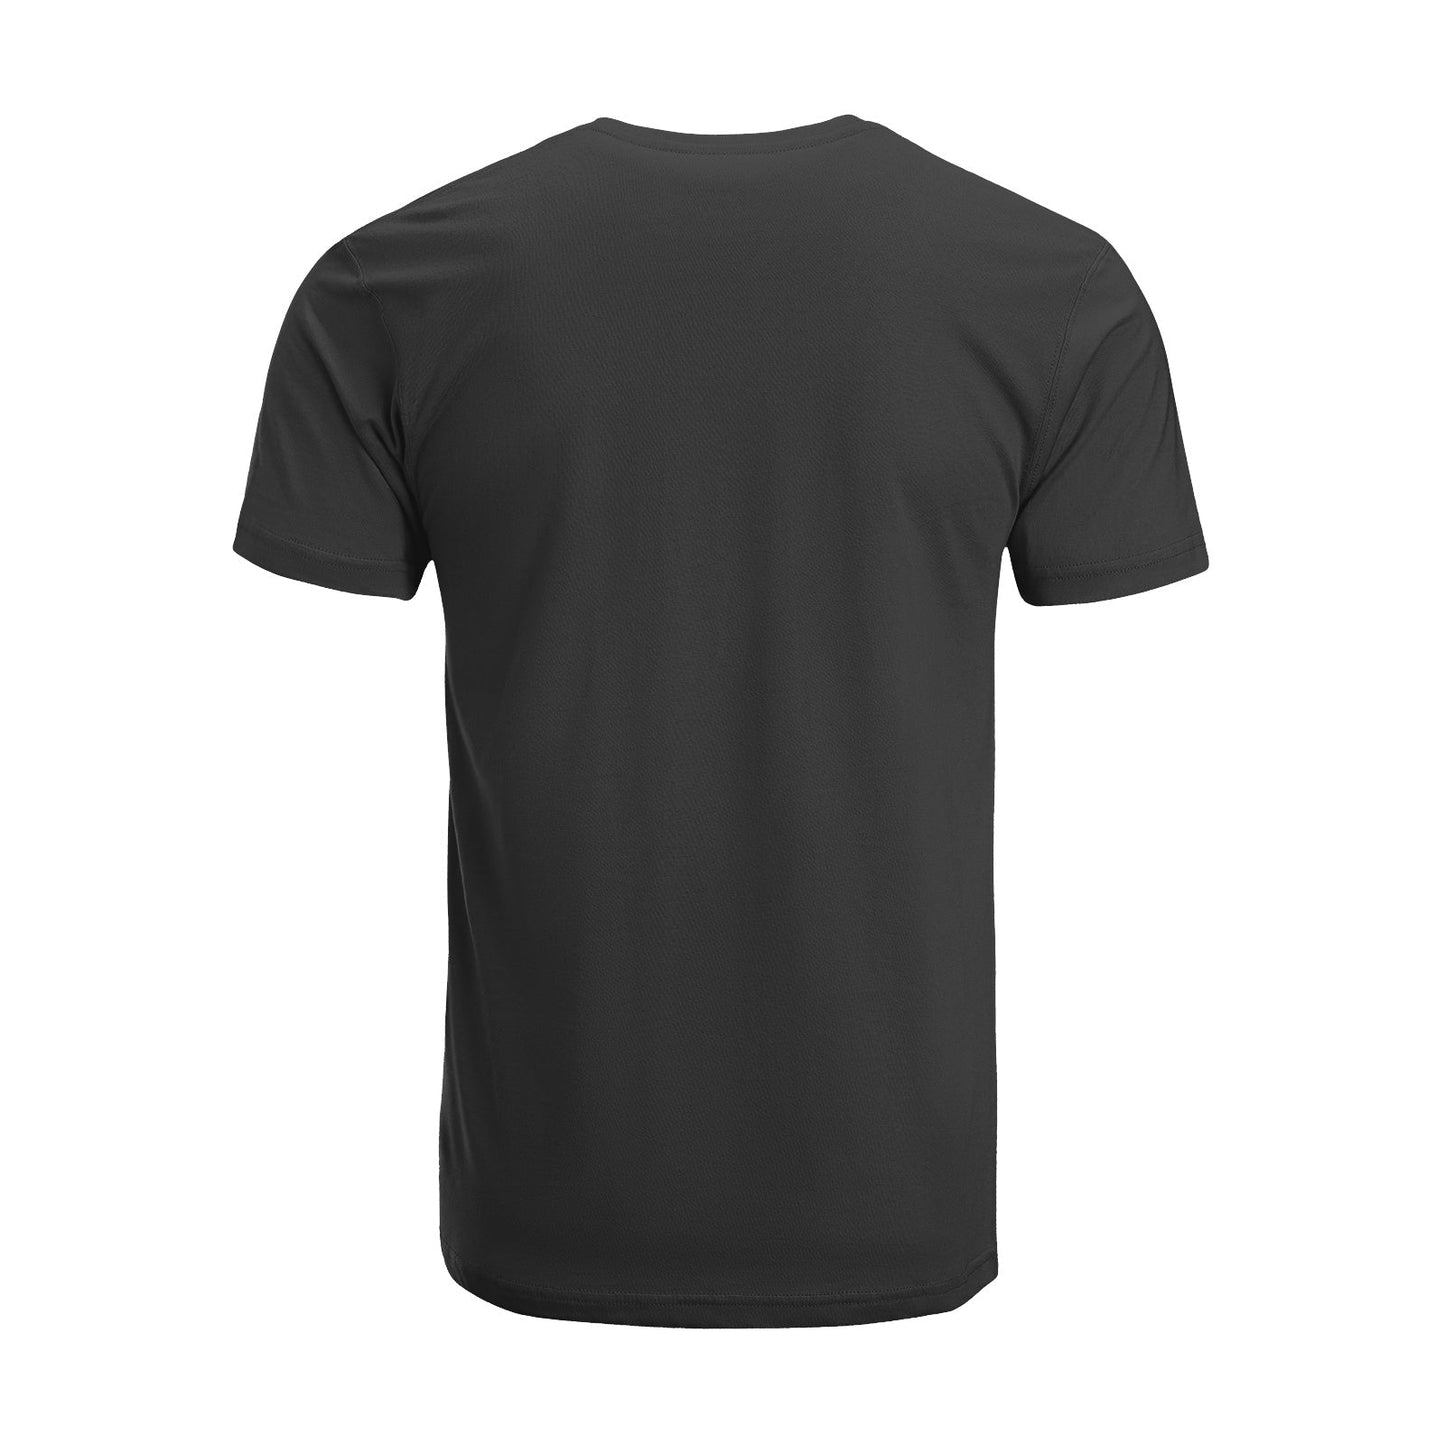 Unisex Short Sleeve Crew Neck Cotton Jersey T-Shirt MOM 18